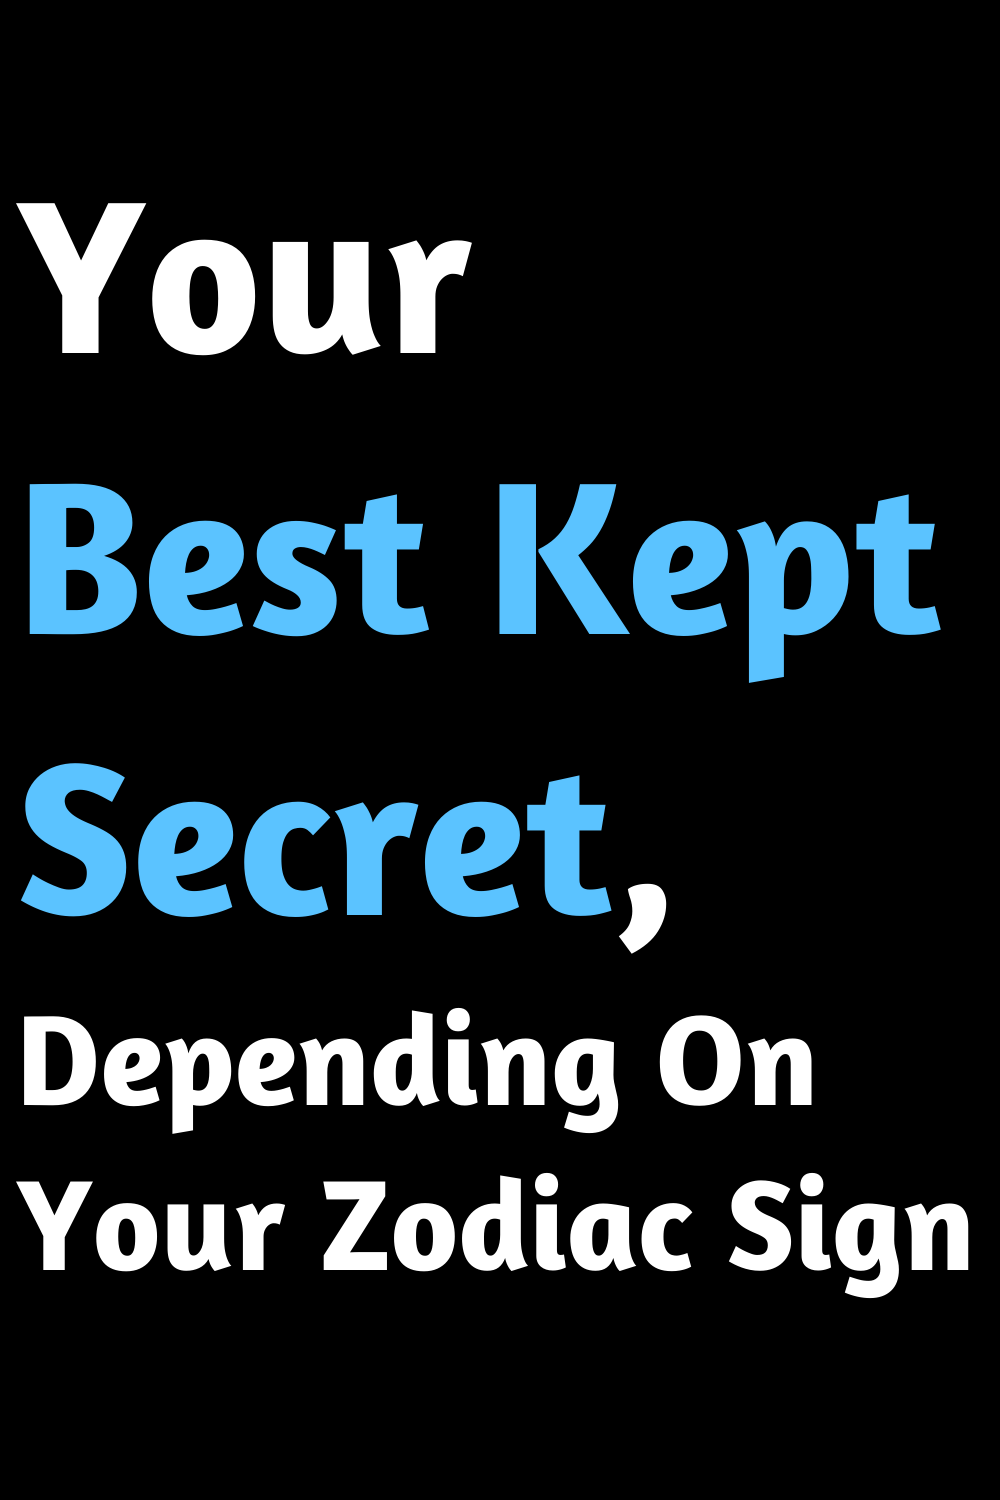 Your Best Kept Secret, Depending On Your Zodiac Sign